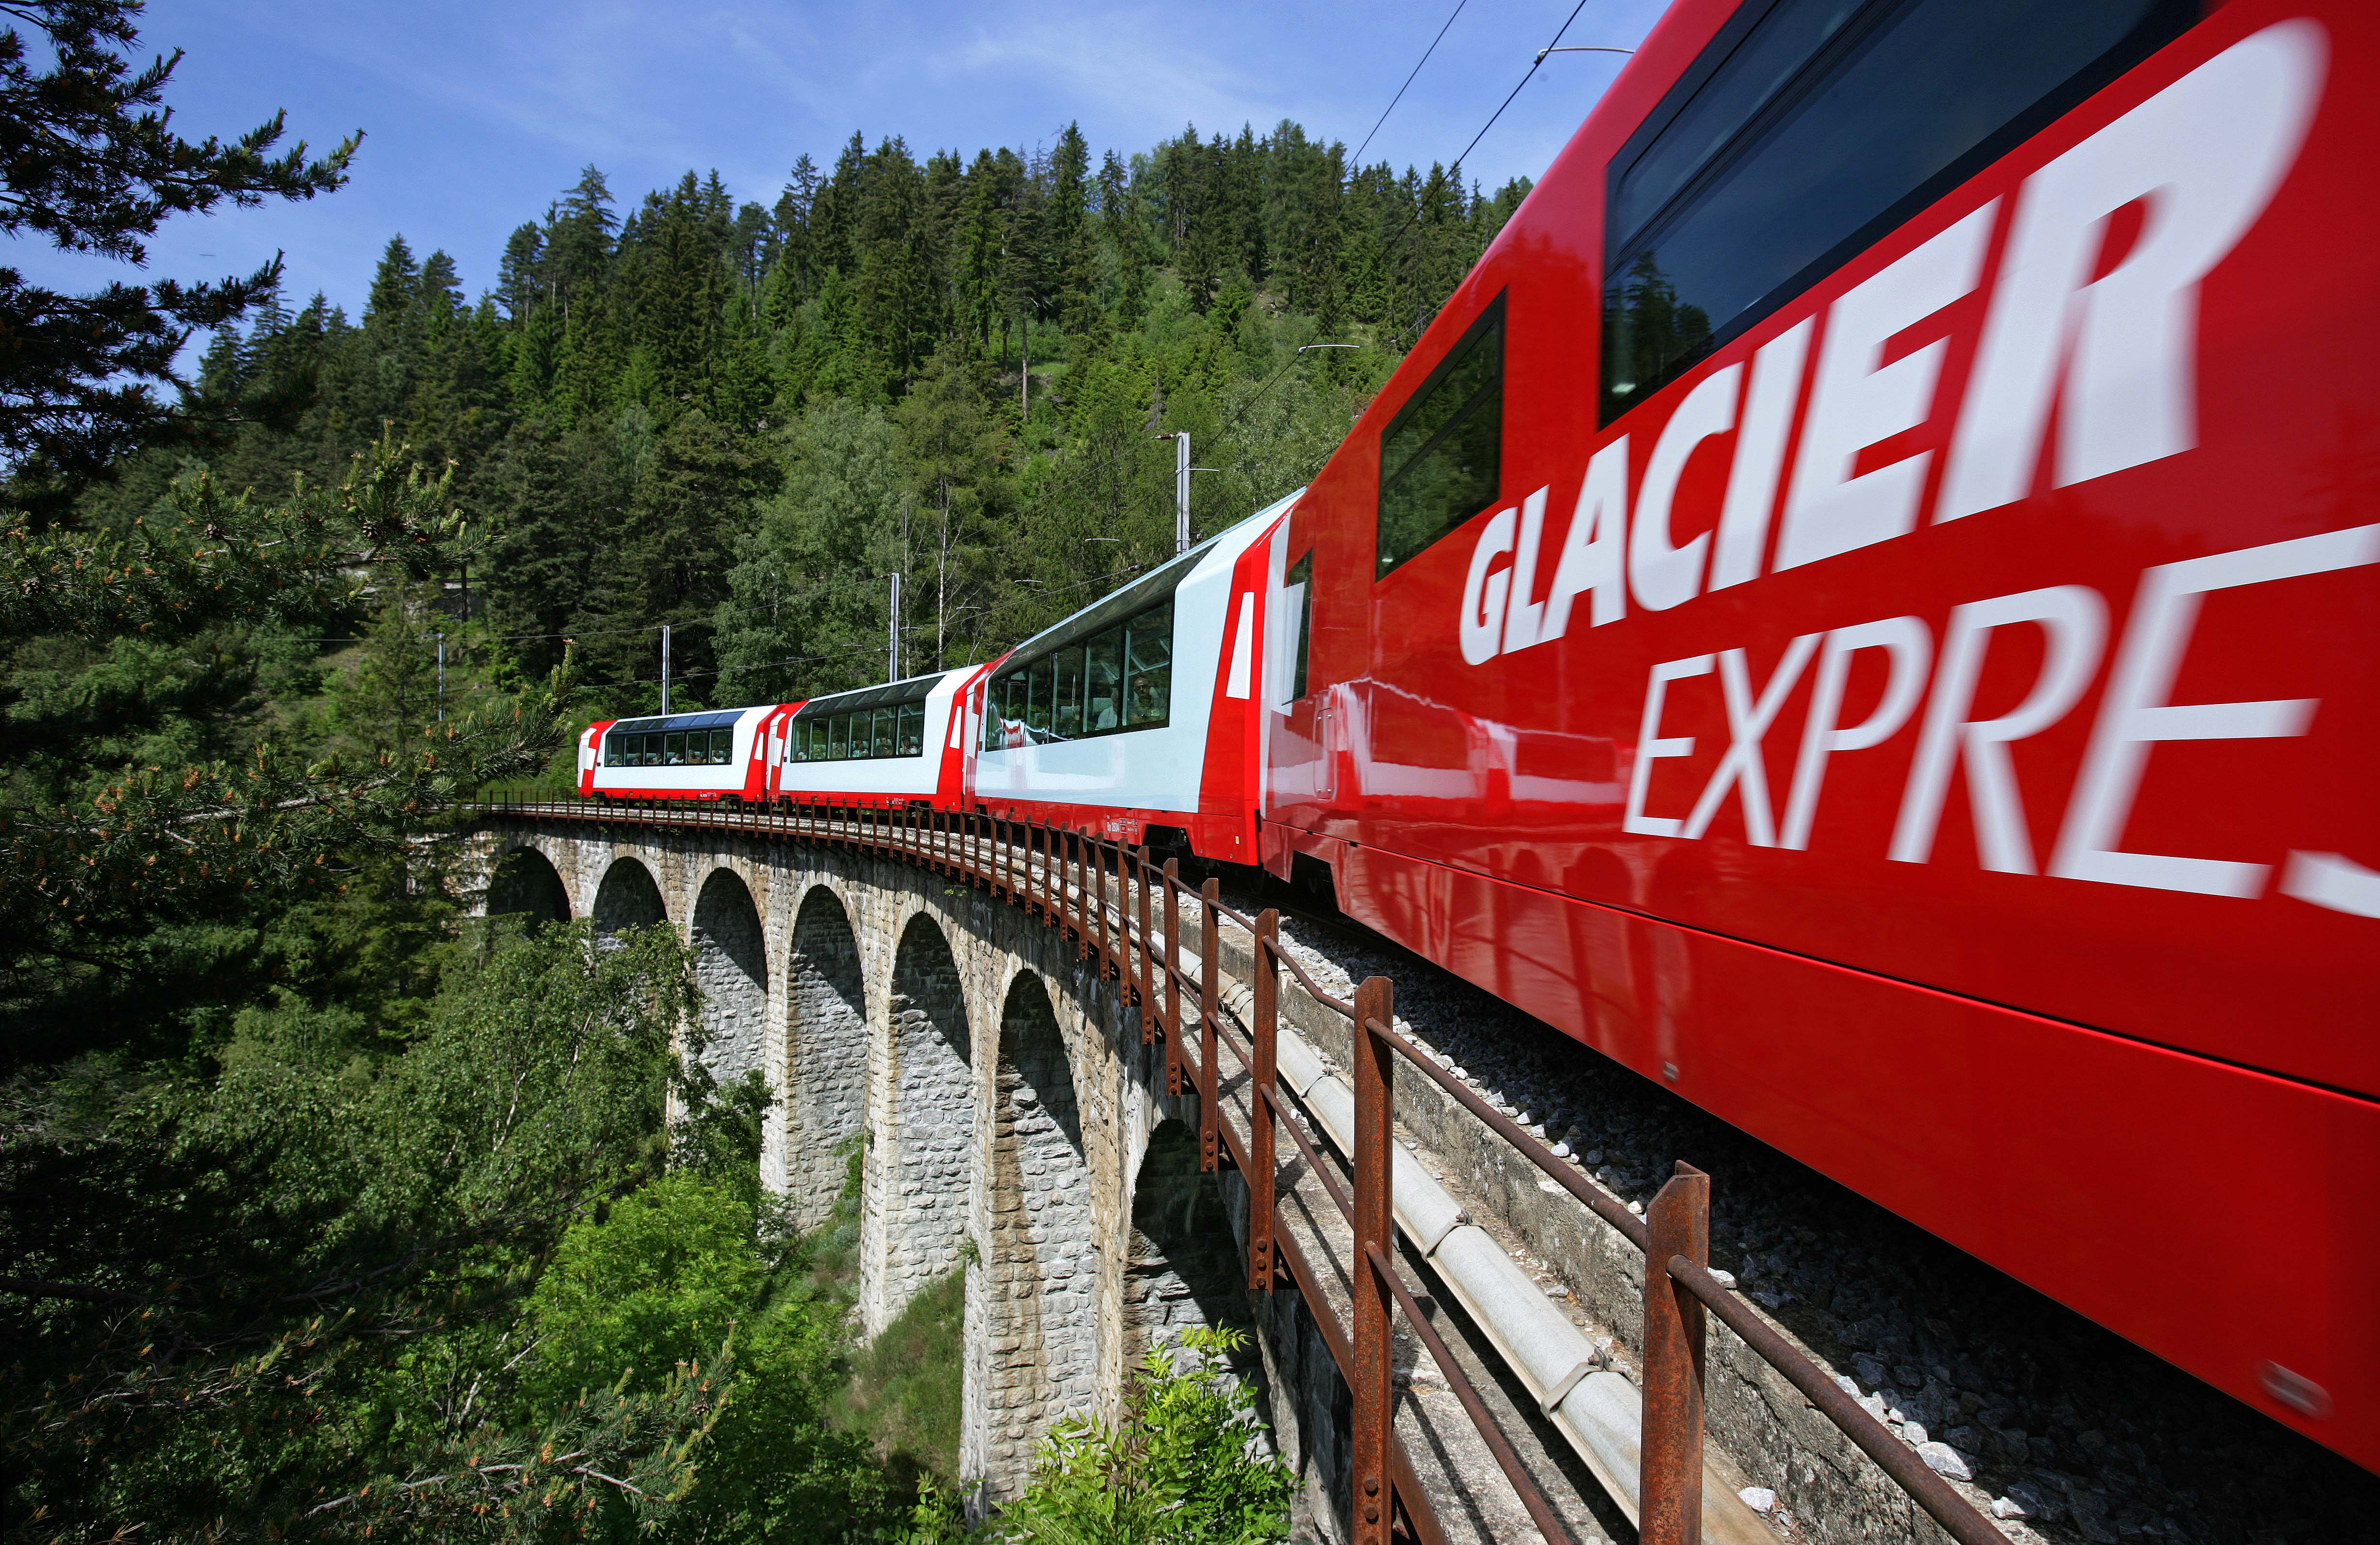 The Glacier Express #11